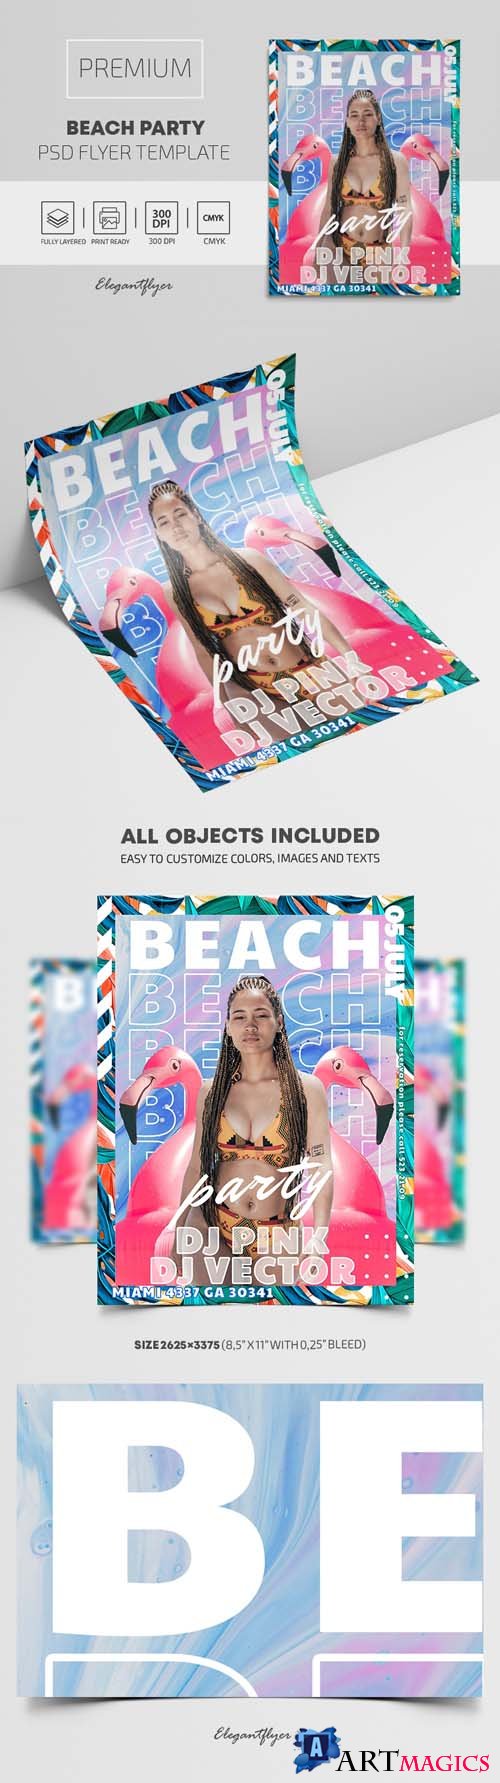 Beach Party Premium PSD Flyer Template